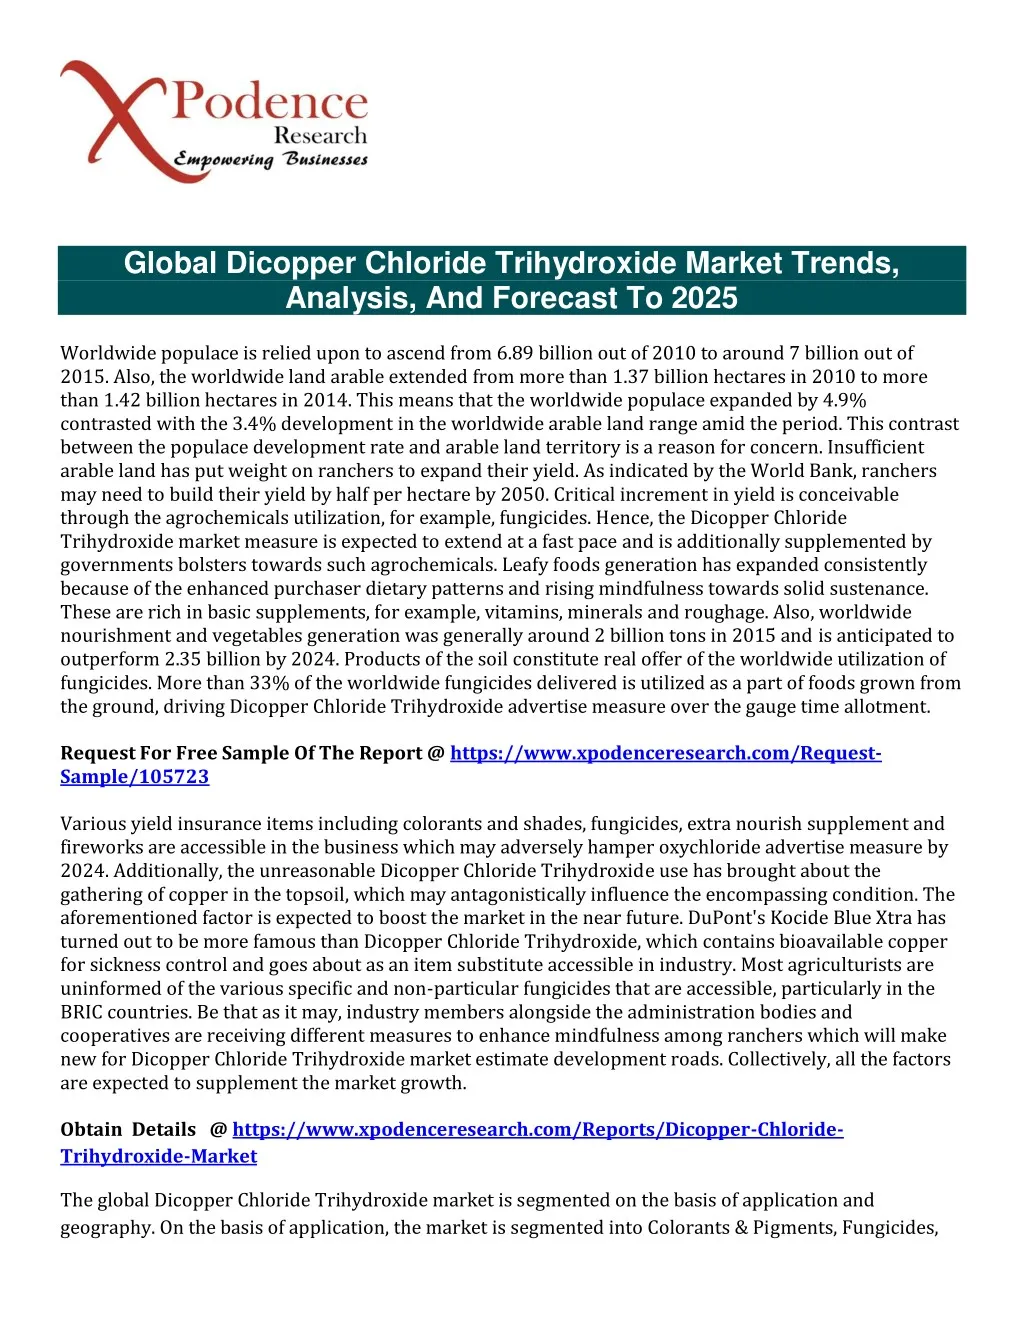 global dicopper chloride trihydroxide market